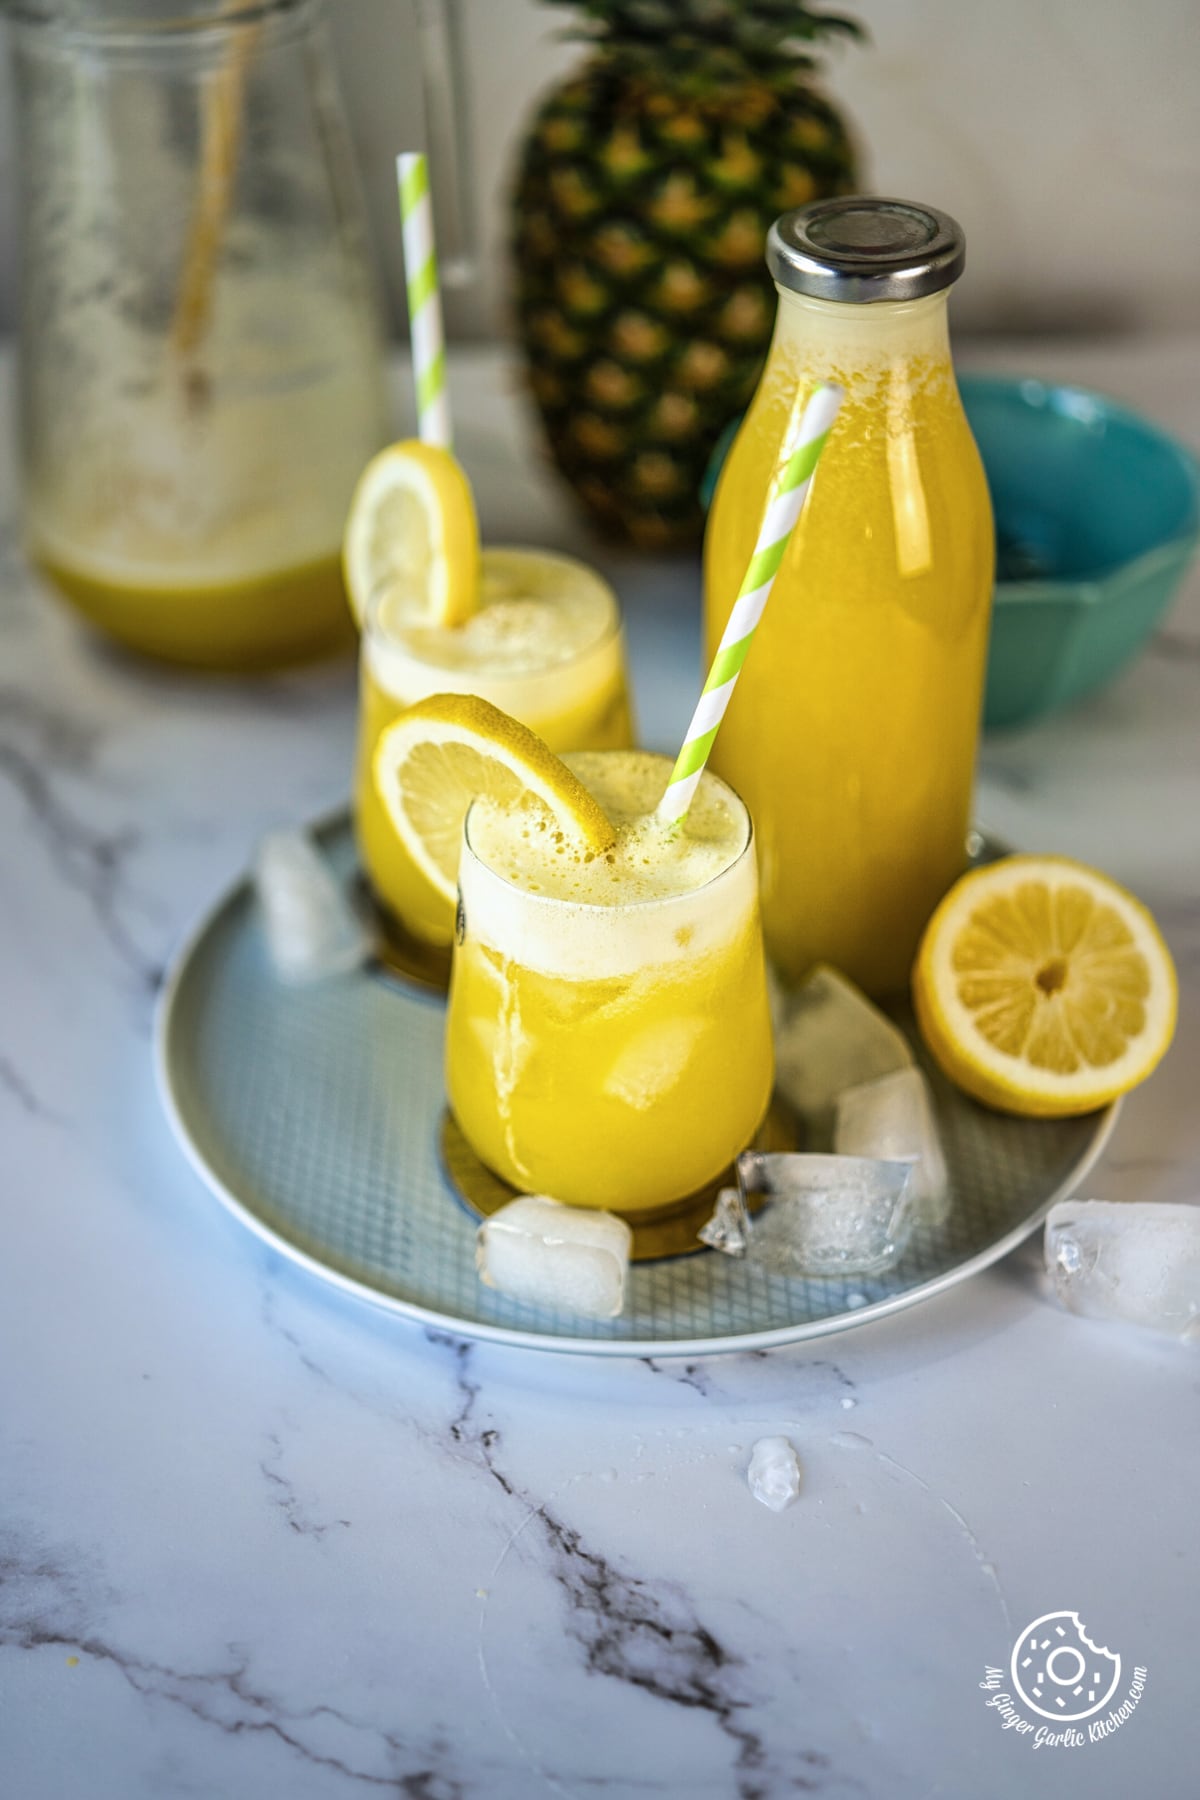 Homemade Pineapple Juice - Immaculate Bites